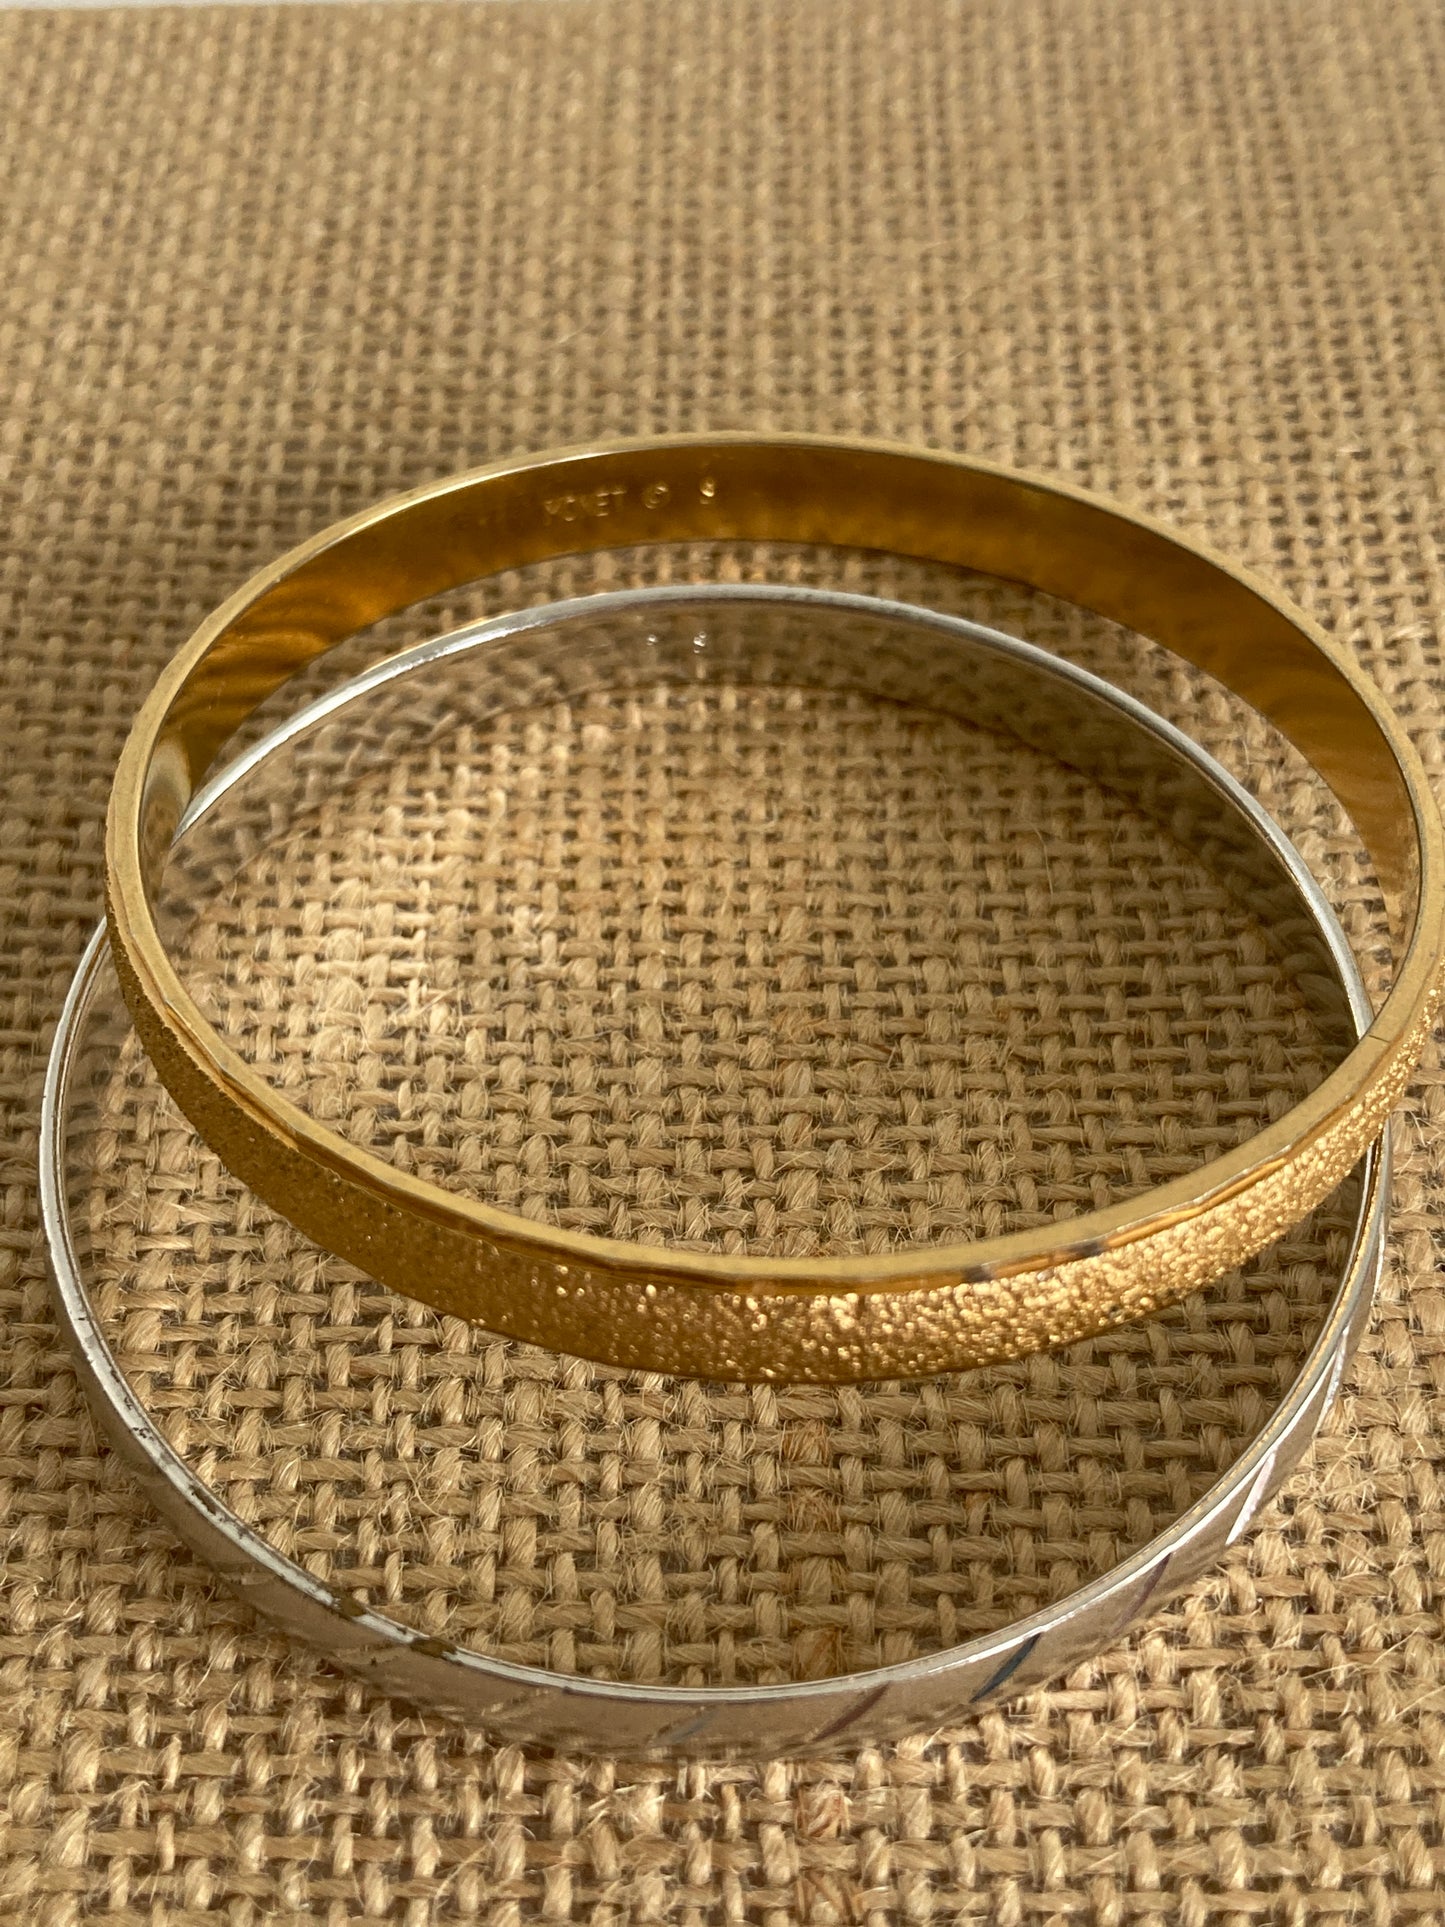 Pair of Vintage Monet Bangle Bracelets Gold/Silver Size Small